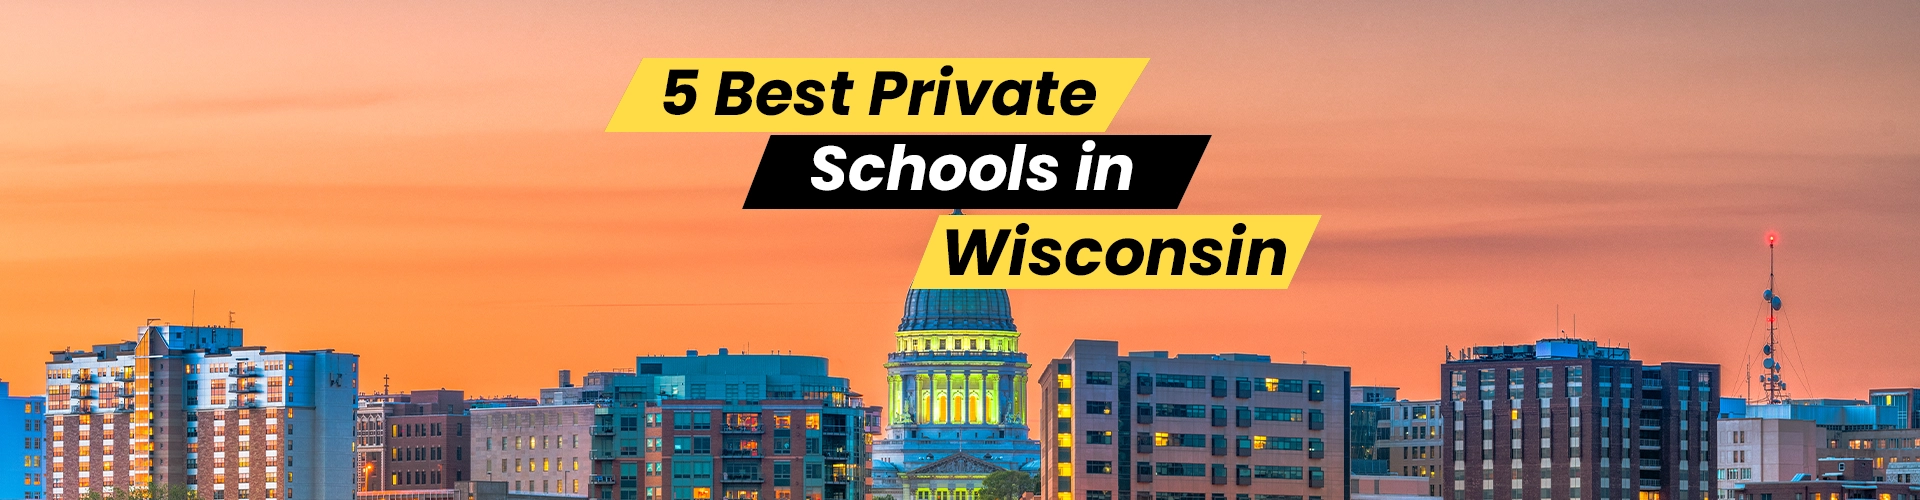 Private Schools in Wisconsin